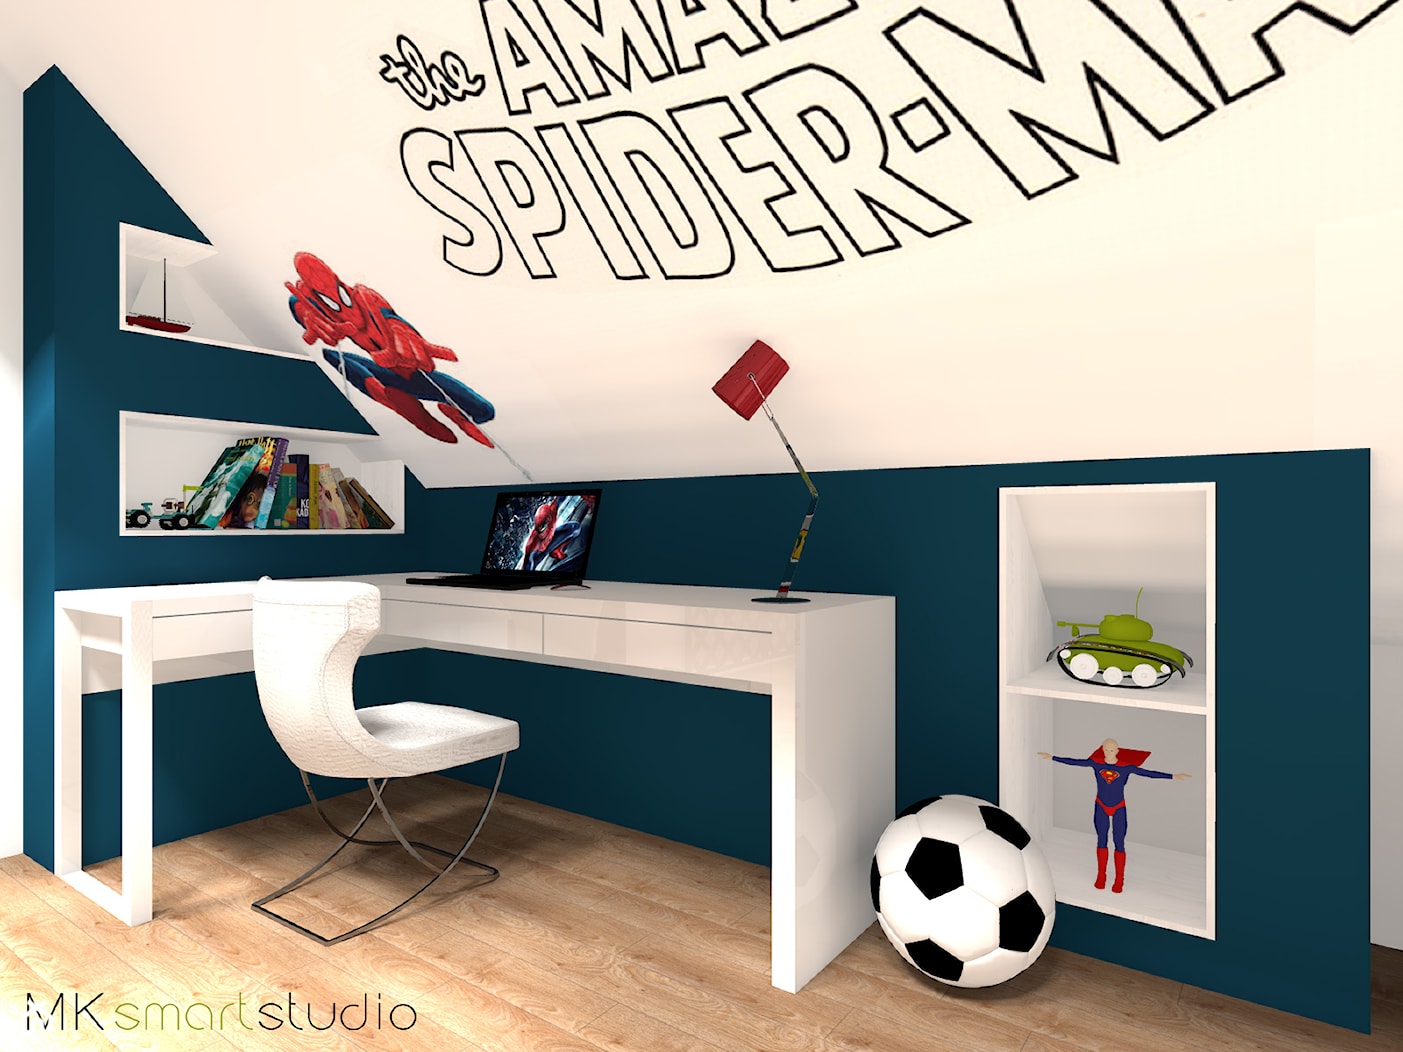 Pokoik dla fana Spidermana - zdjęcie od MKsmartstudio - Homebook